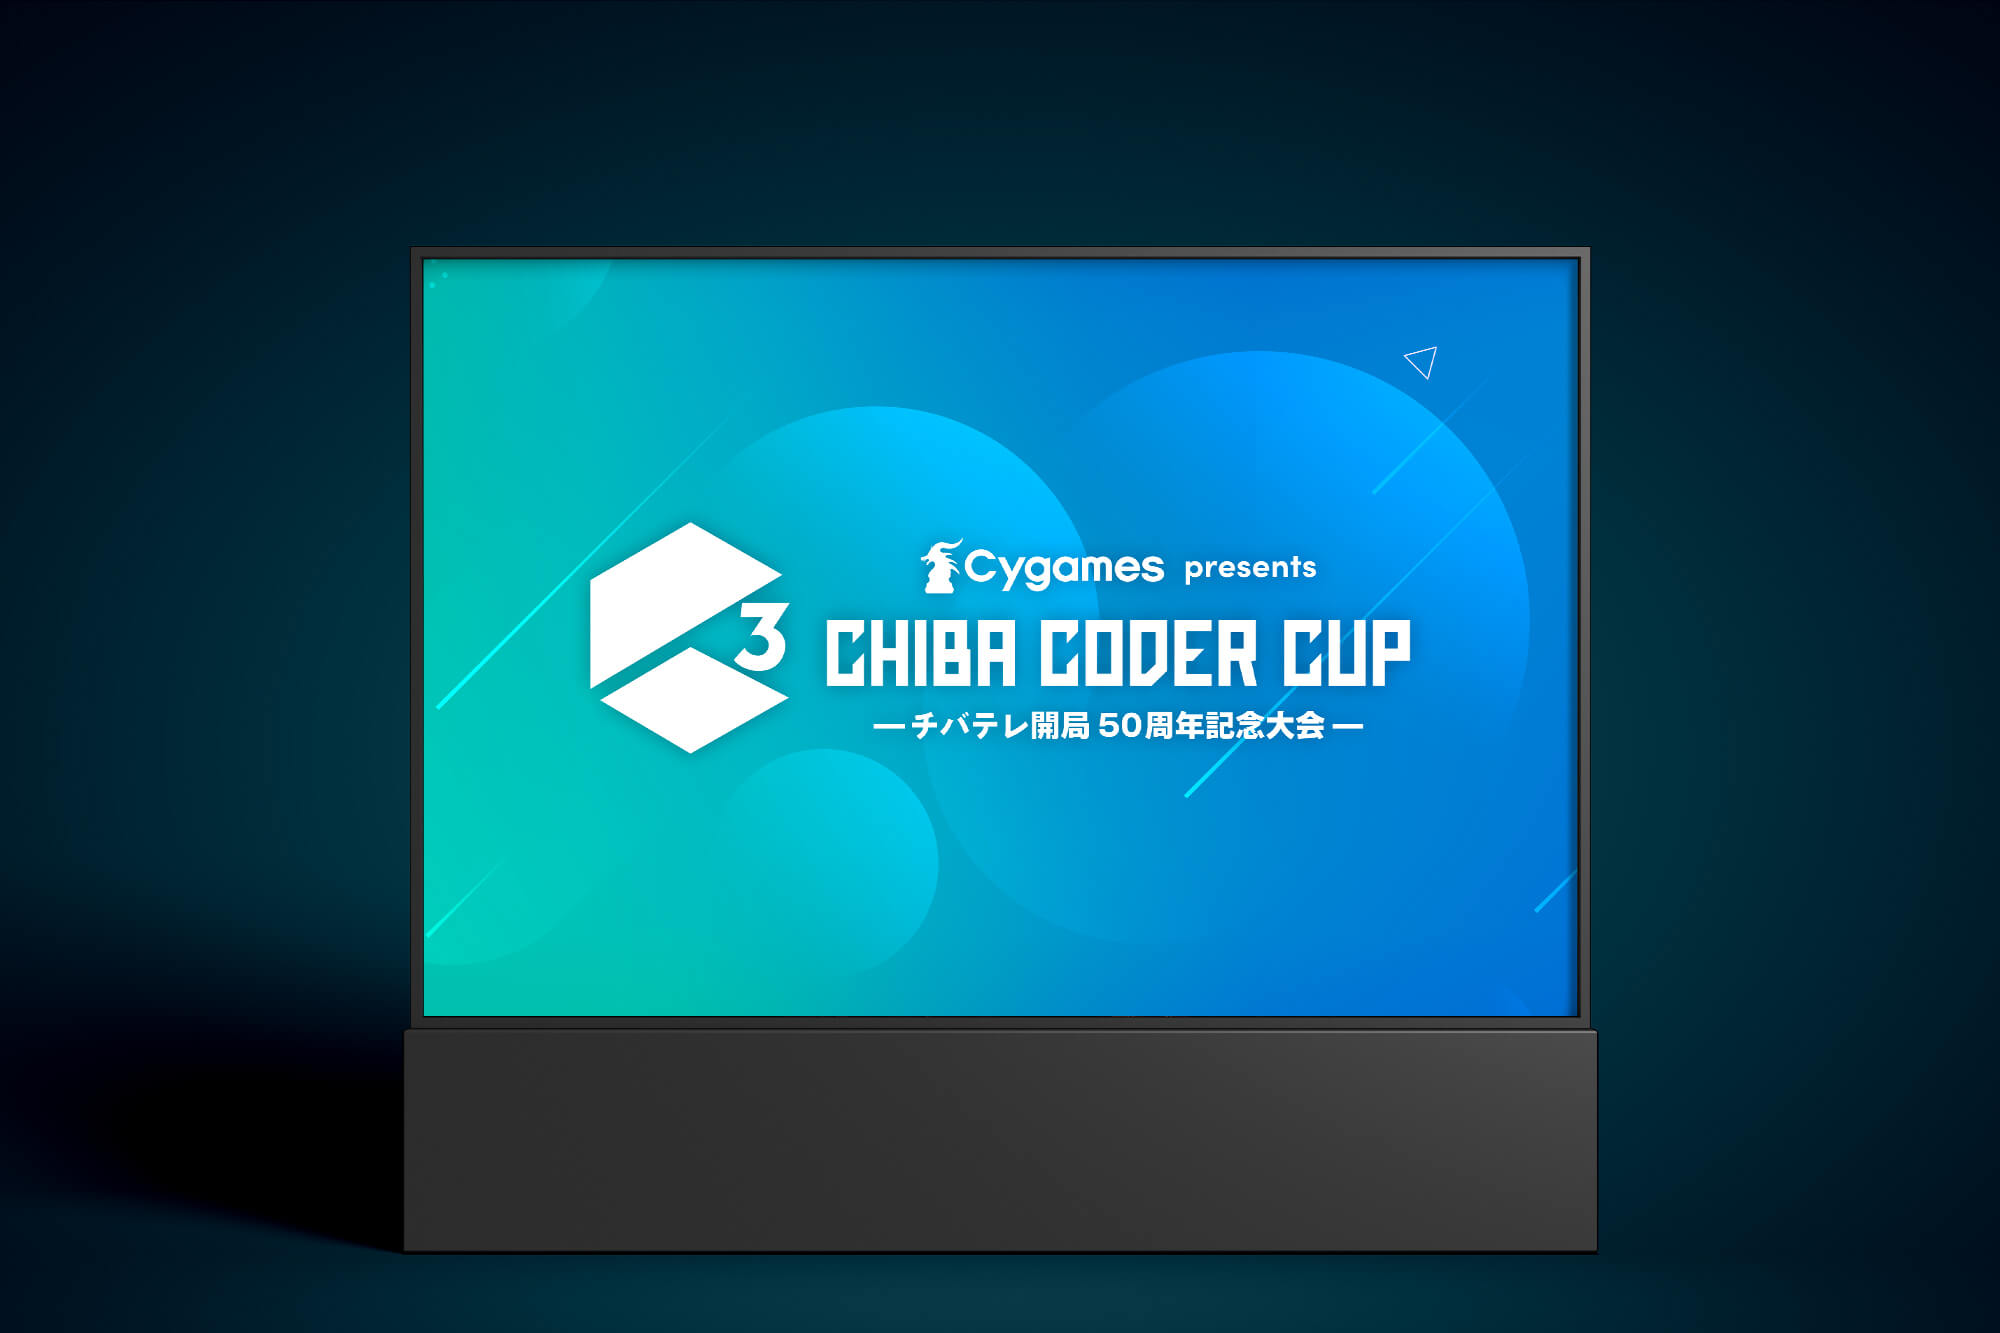 CHIBA CODER CUP LOGO DESIGN